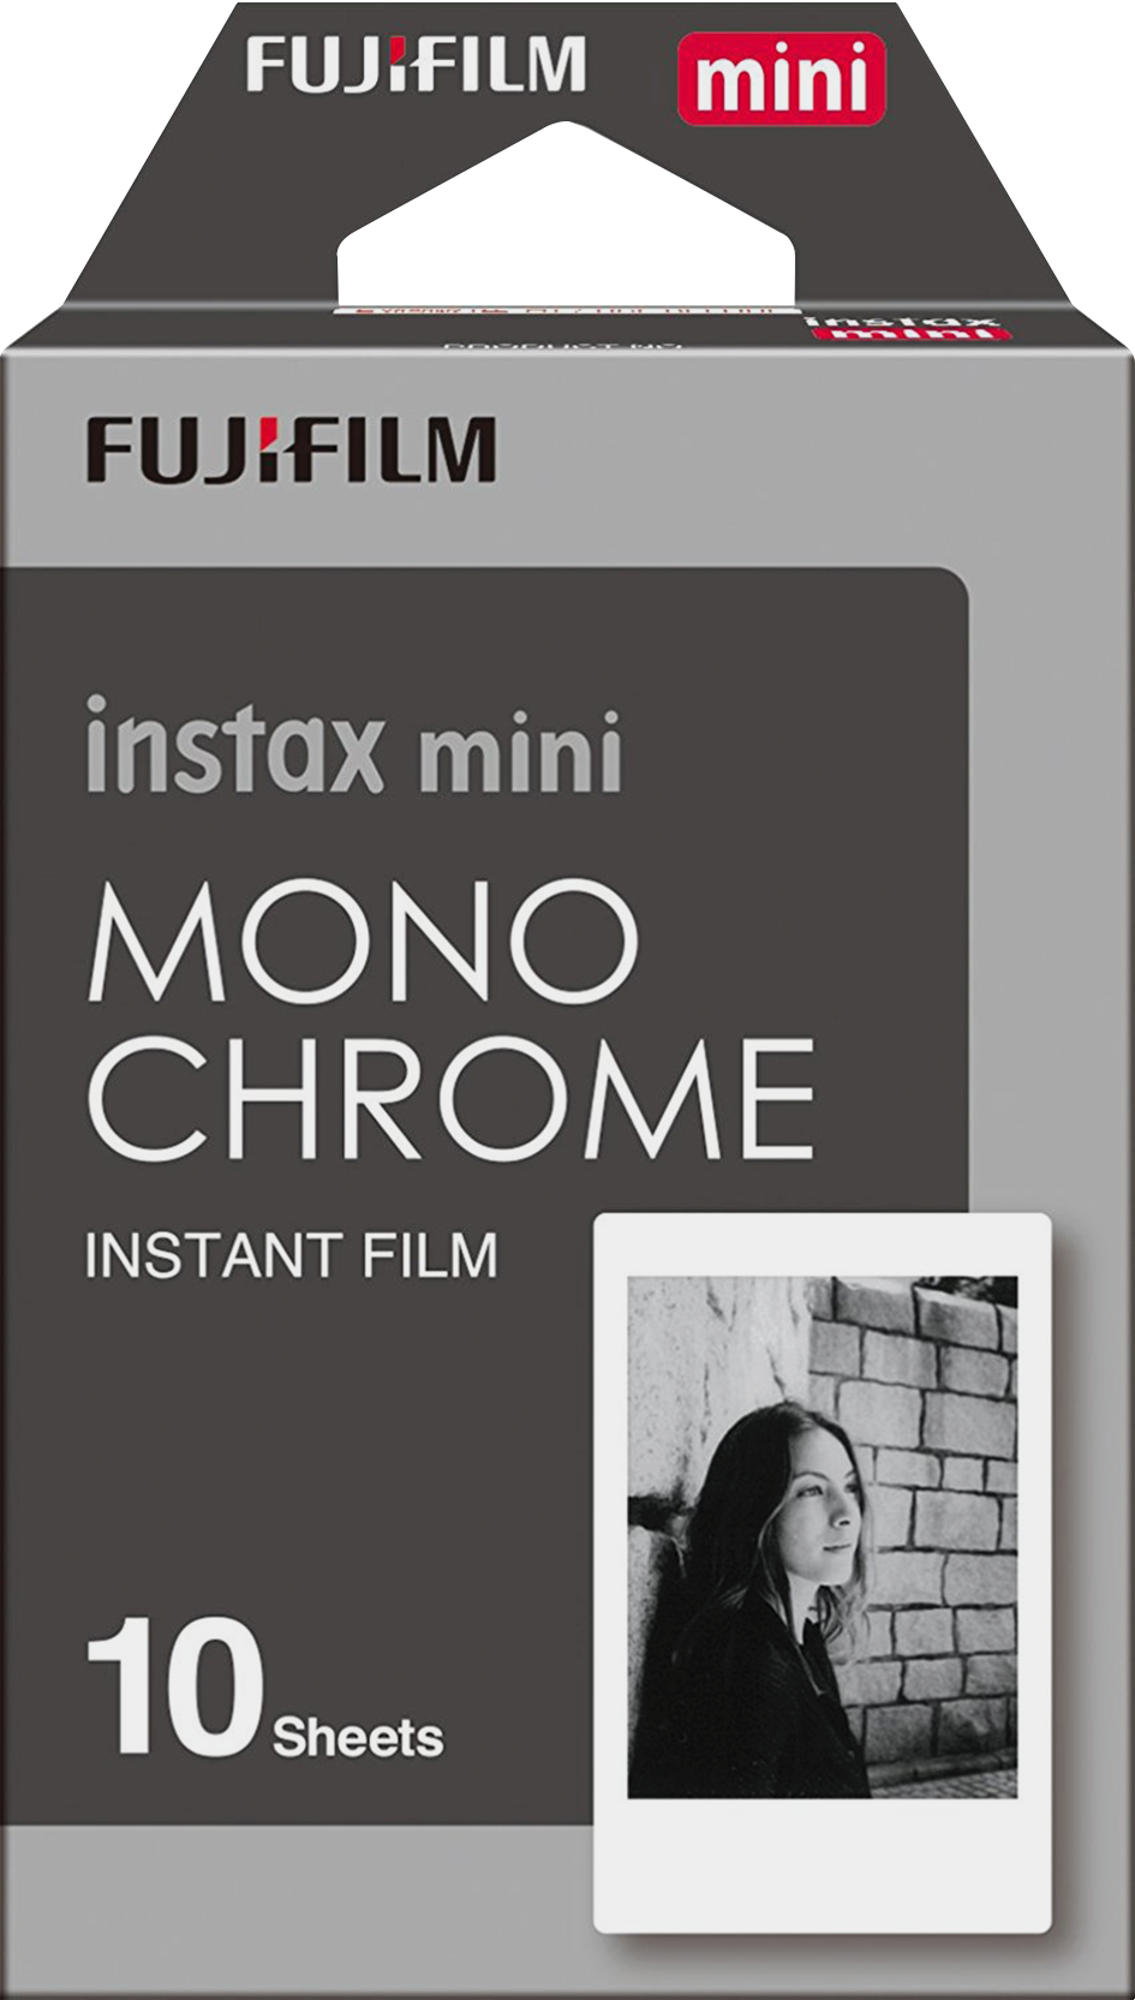 Film Monochrome FUJIFILM mini instax Sofortbildfilm